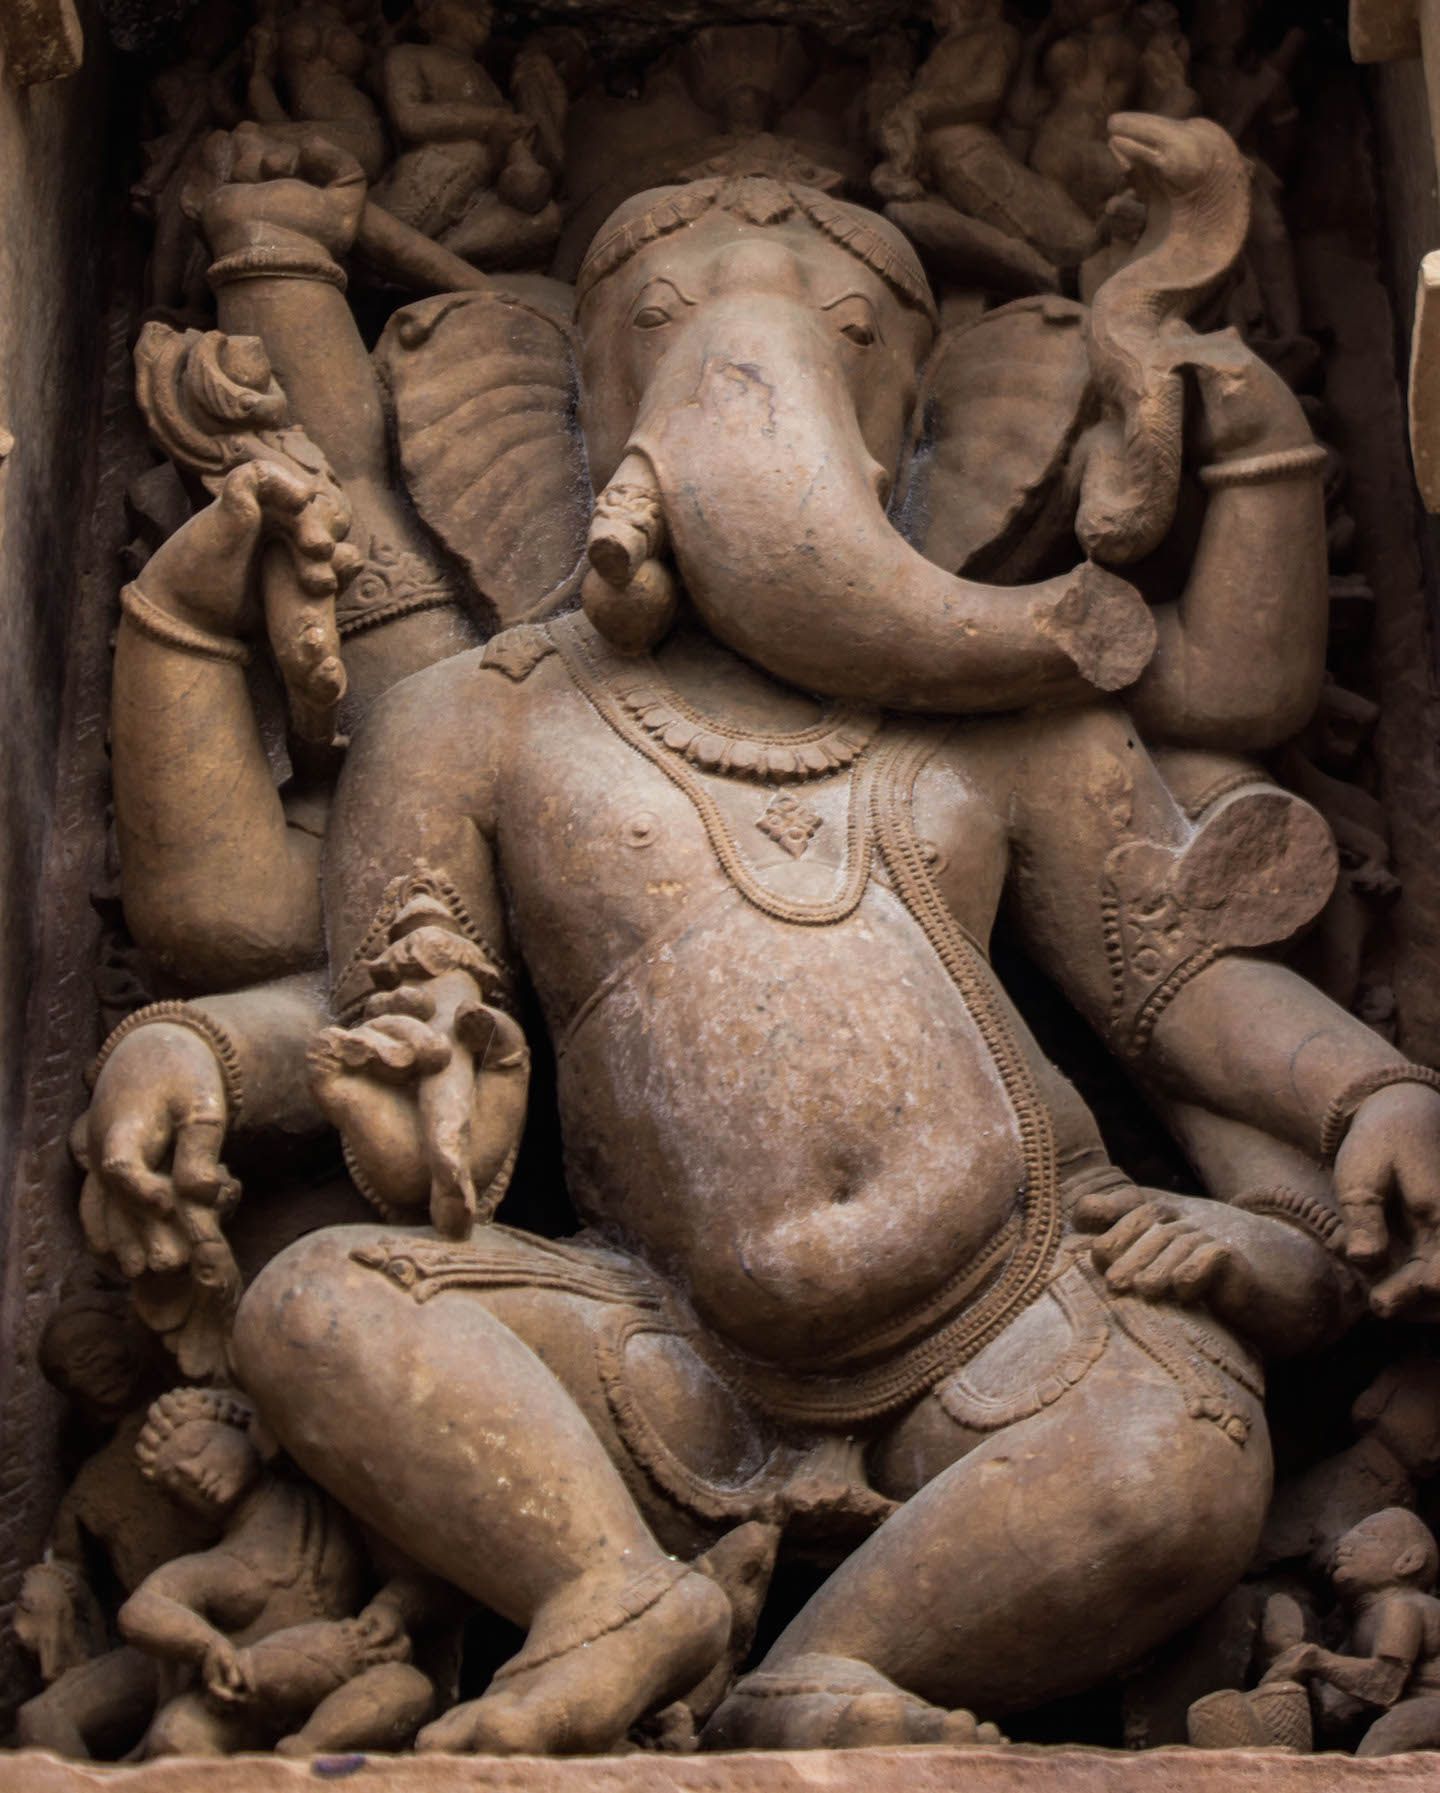 Lord Ganesh on the walls of Lakshmana temple, Khajuraho, India